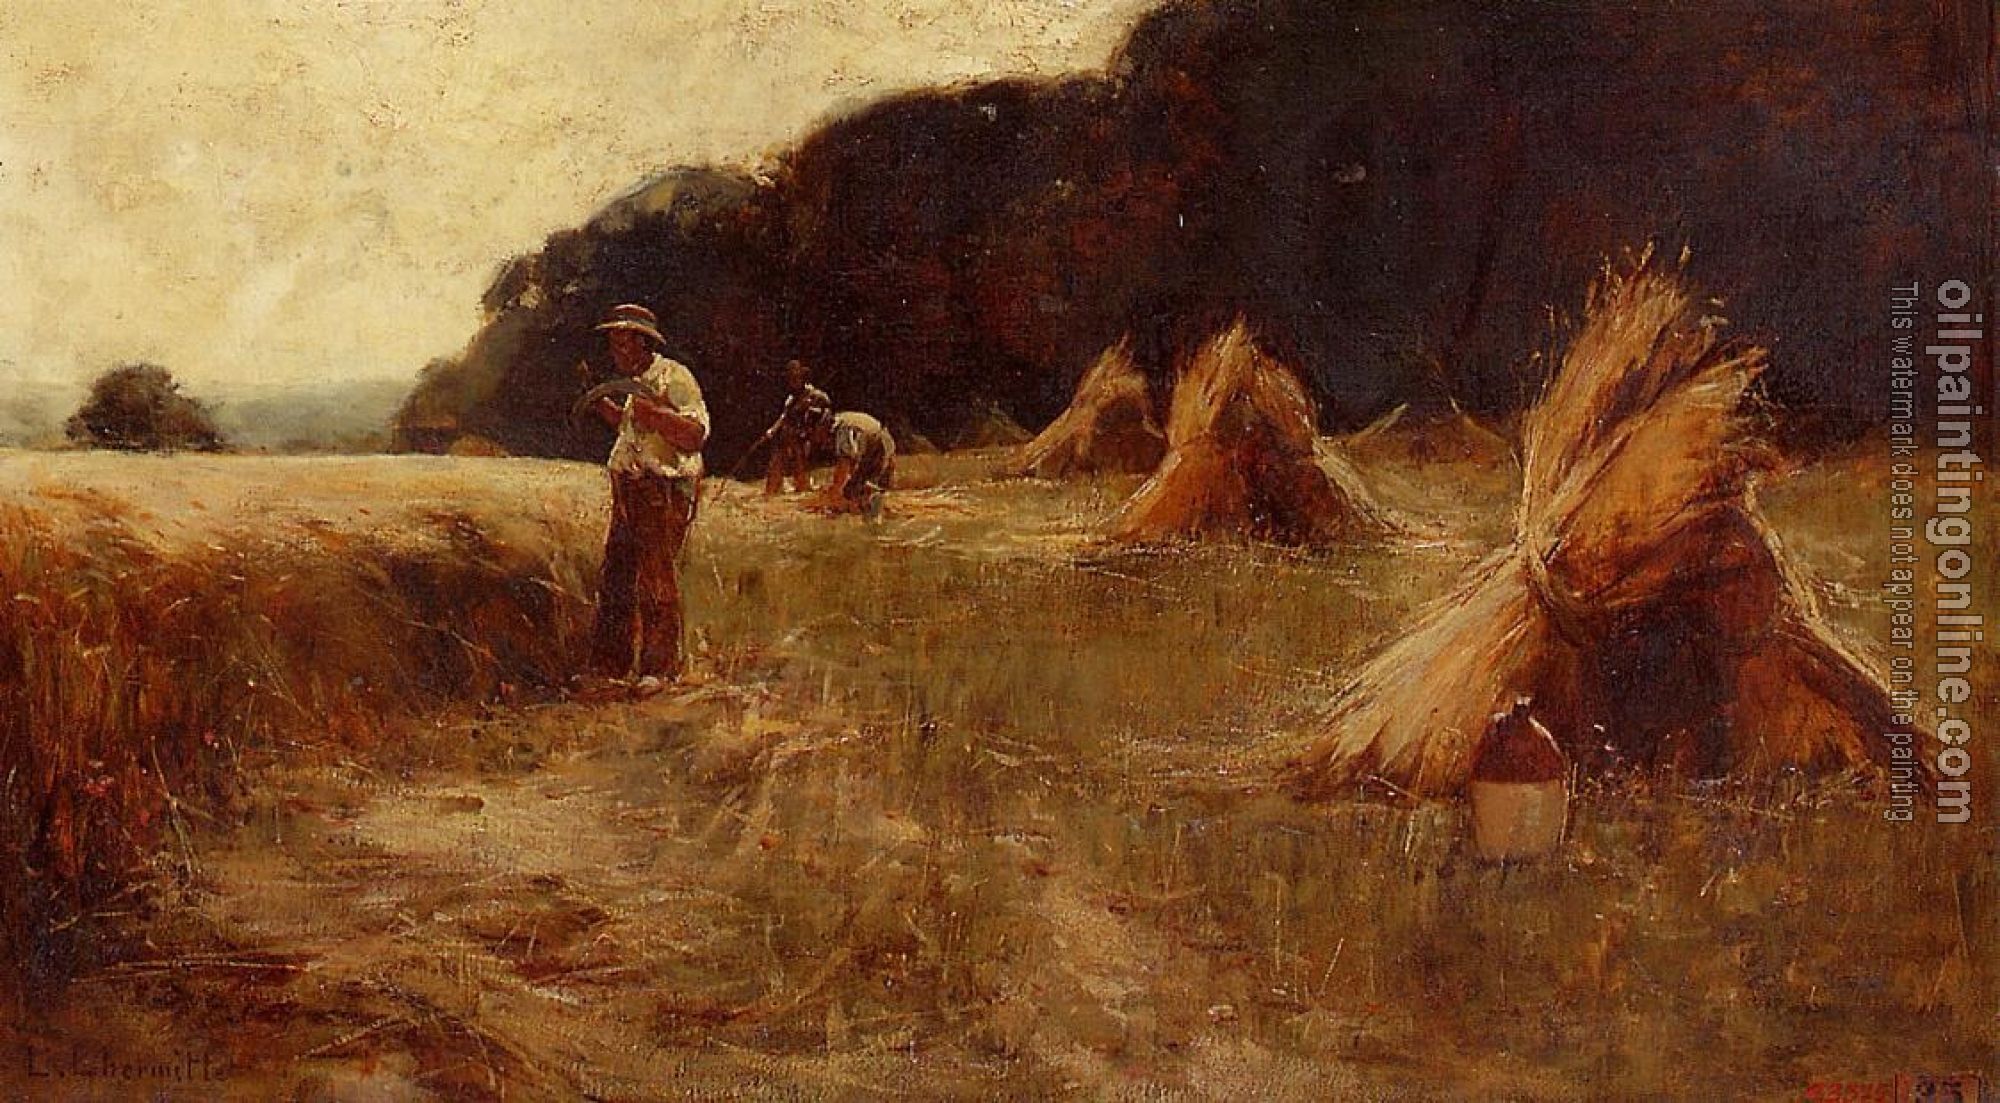 Lhermitte, Leon Augustin - The Harvesters